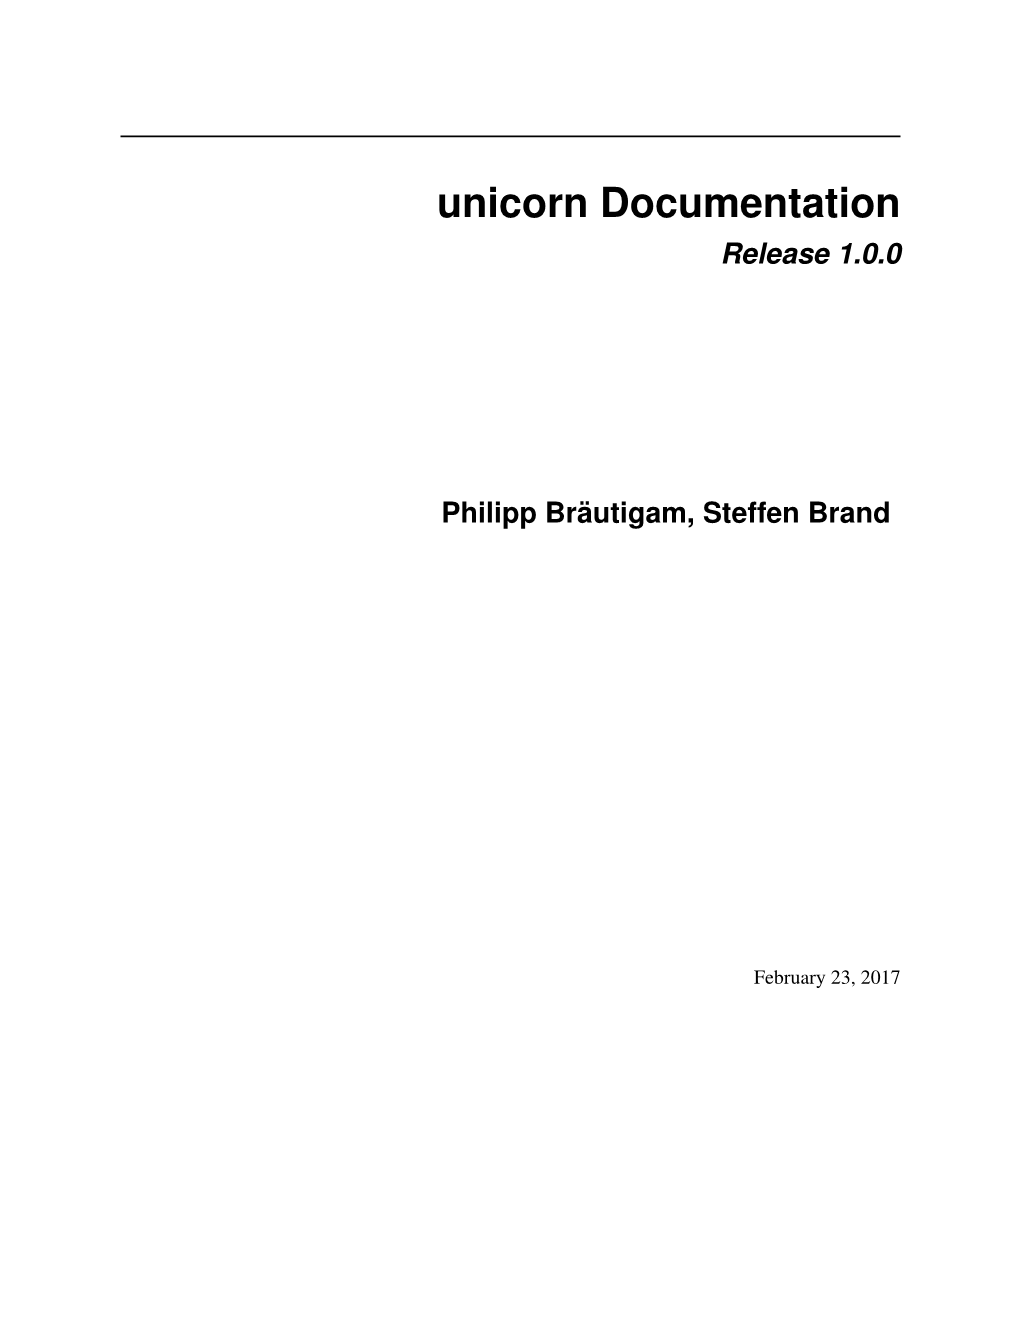 Unicorn Documentation Release 1.0.0